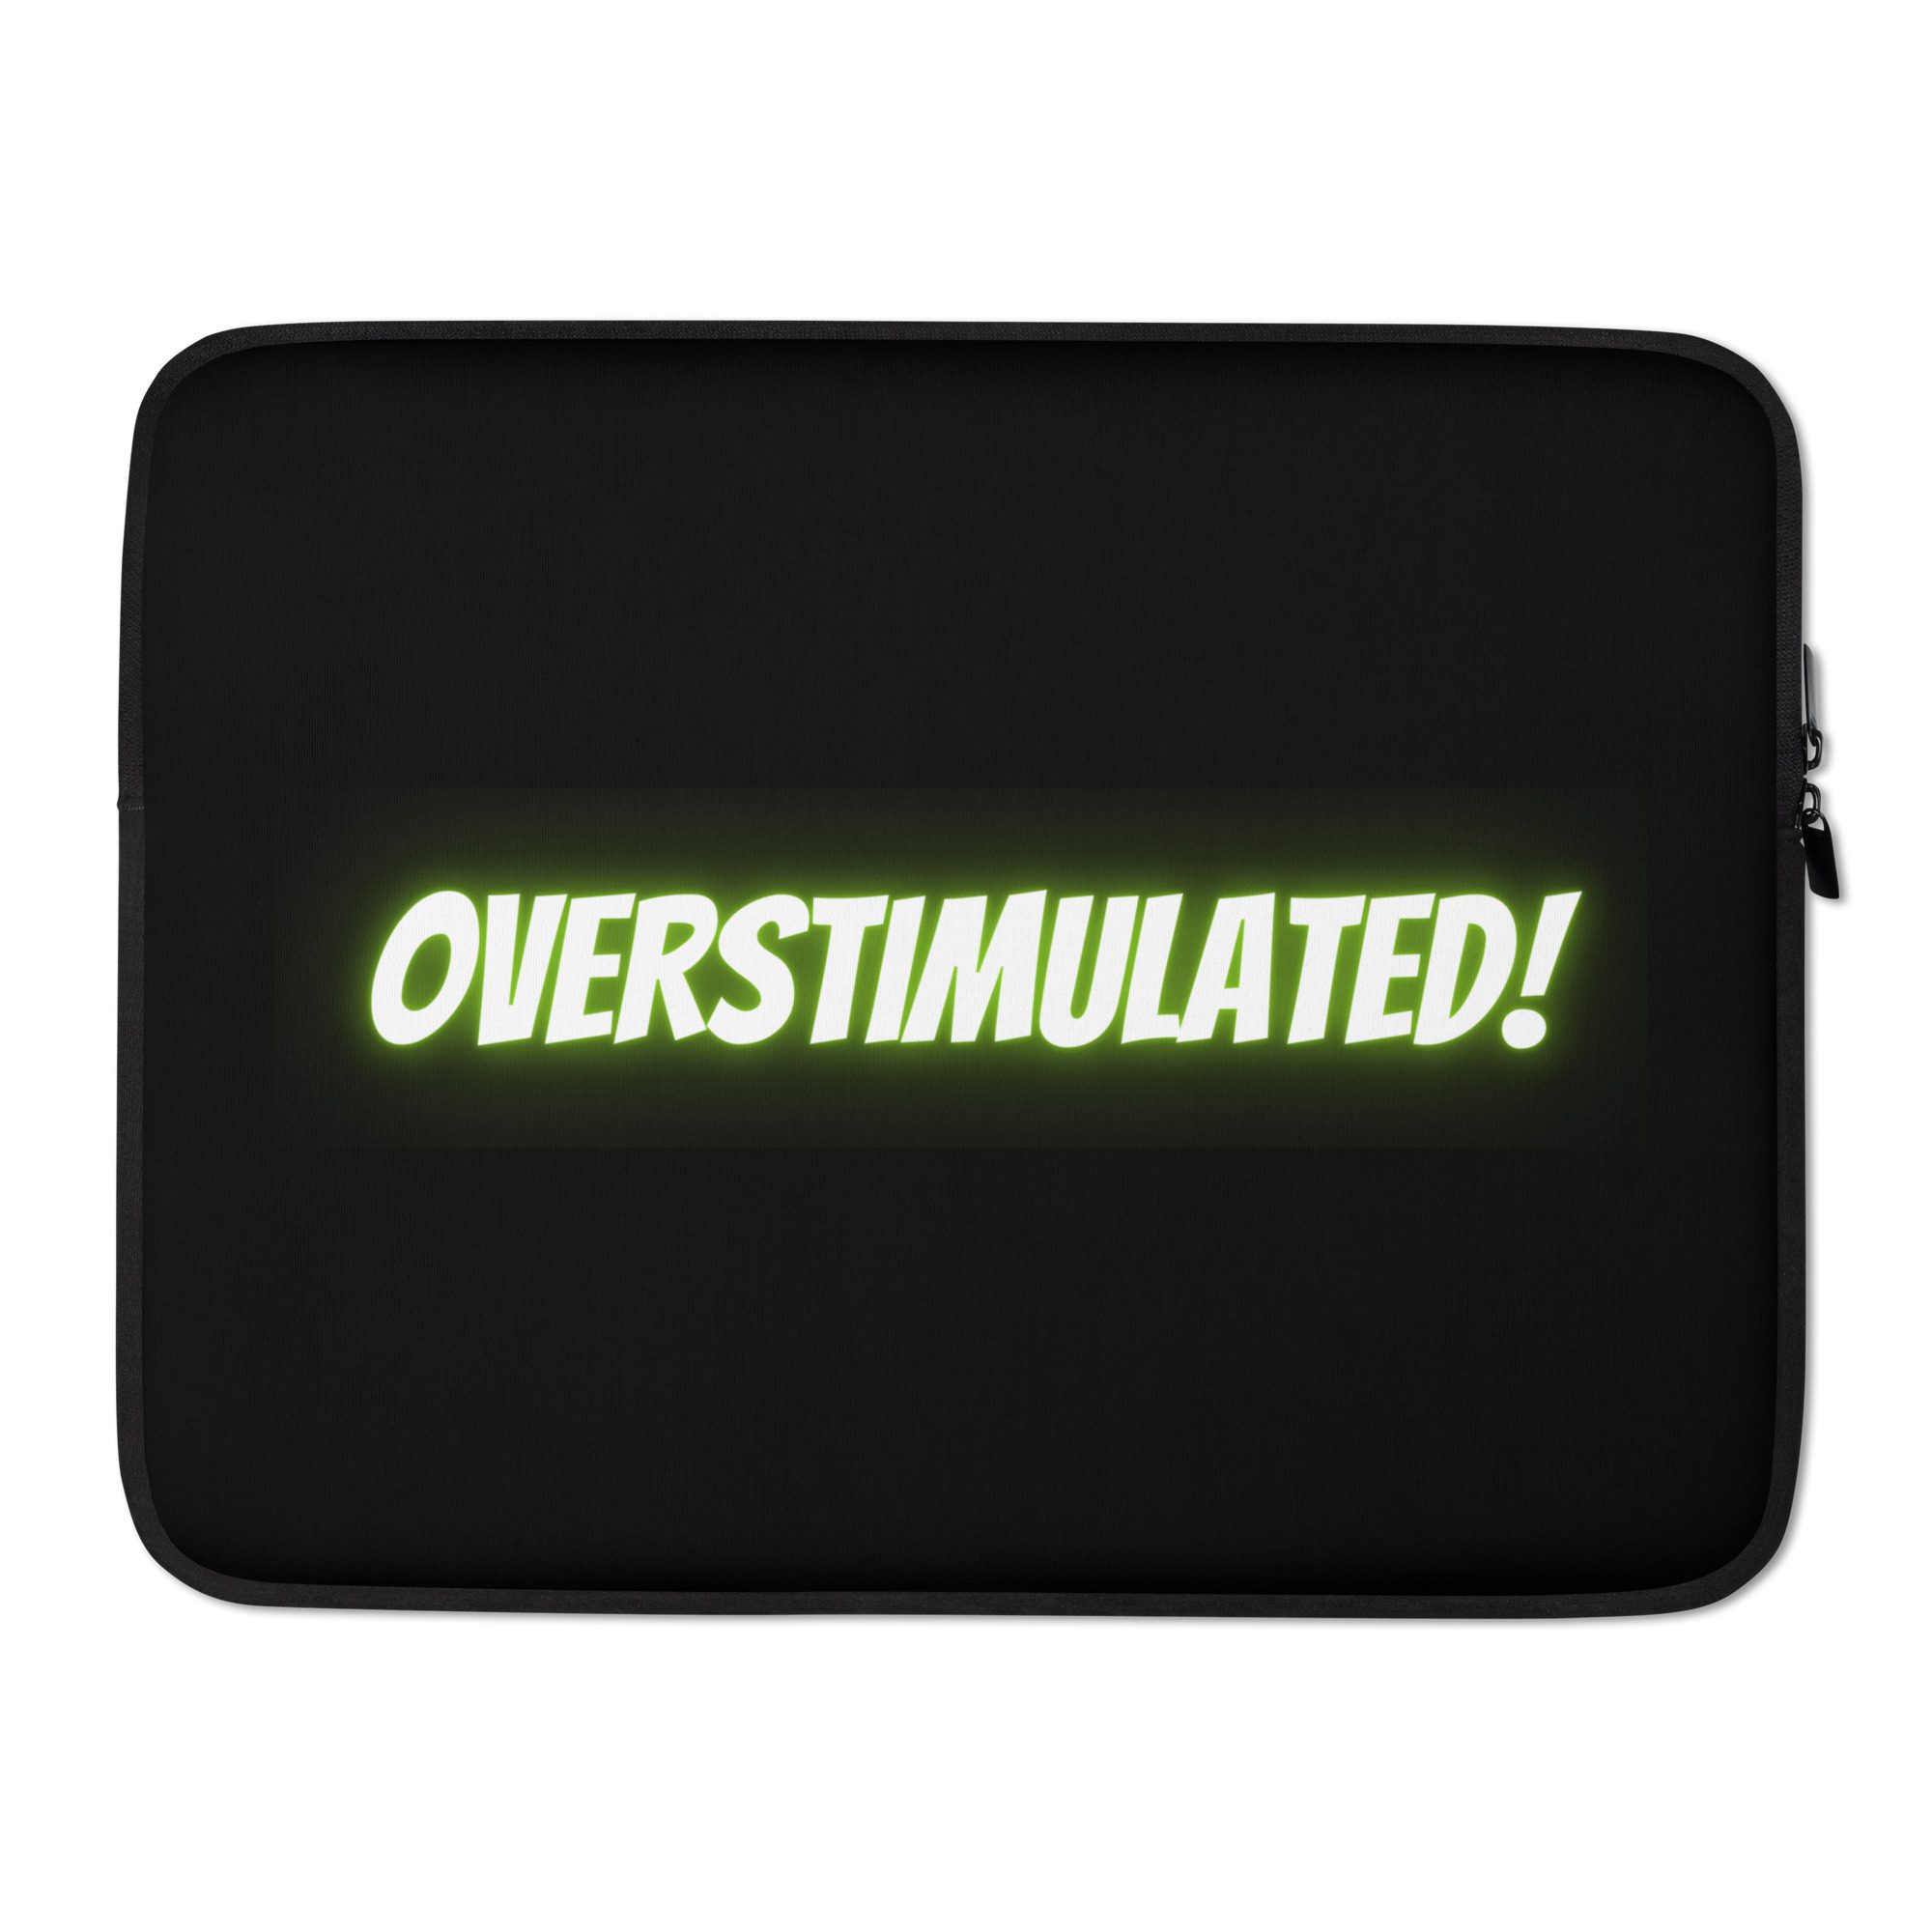 OVERSTIMULATED! Laptop Sleeve